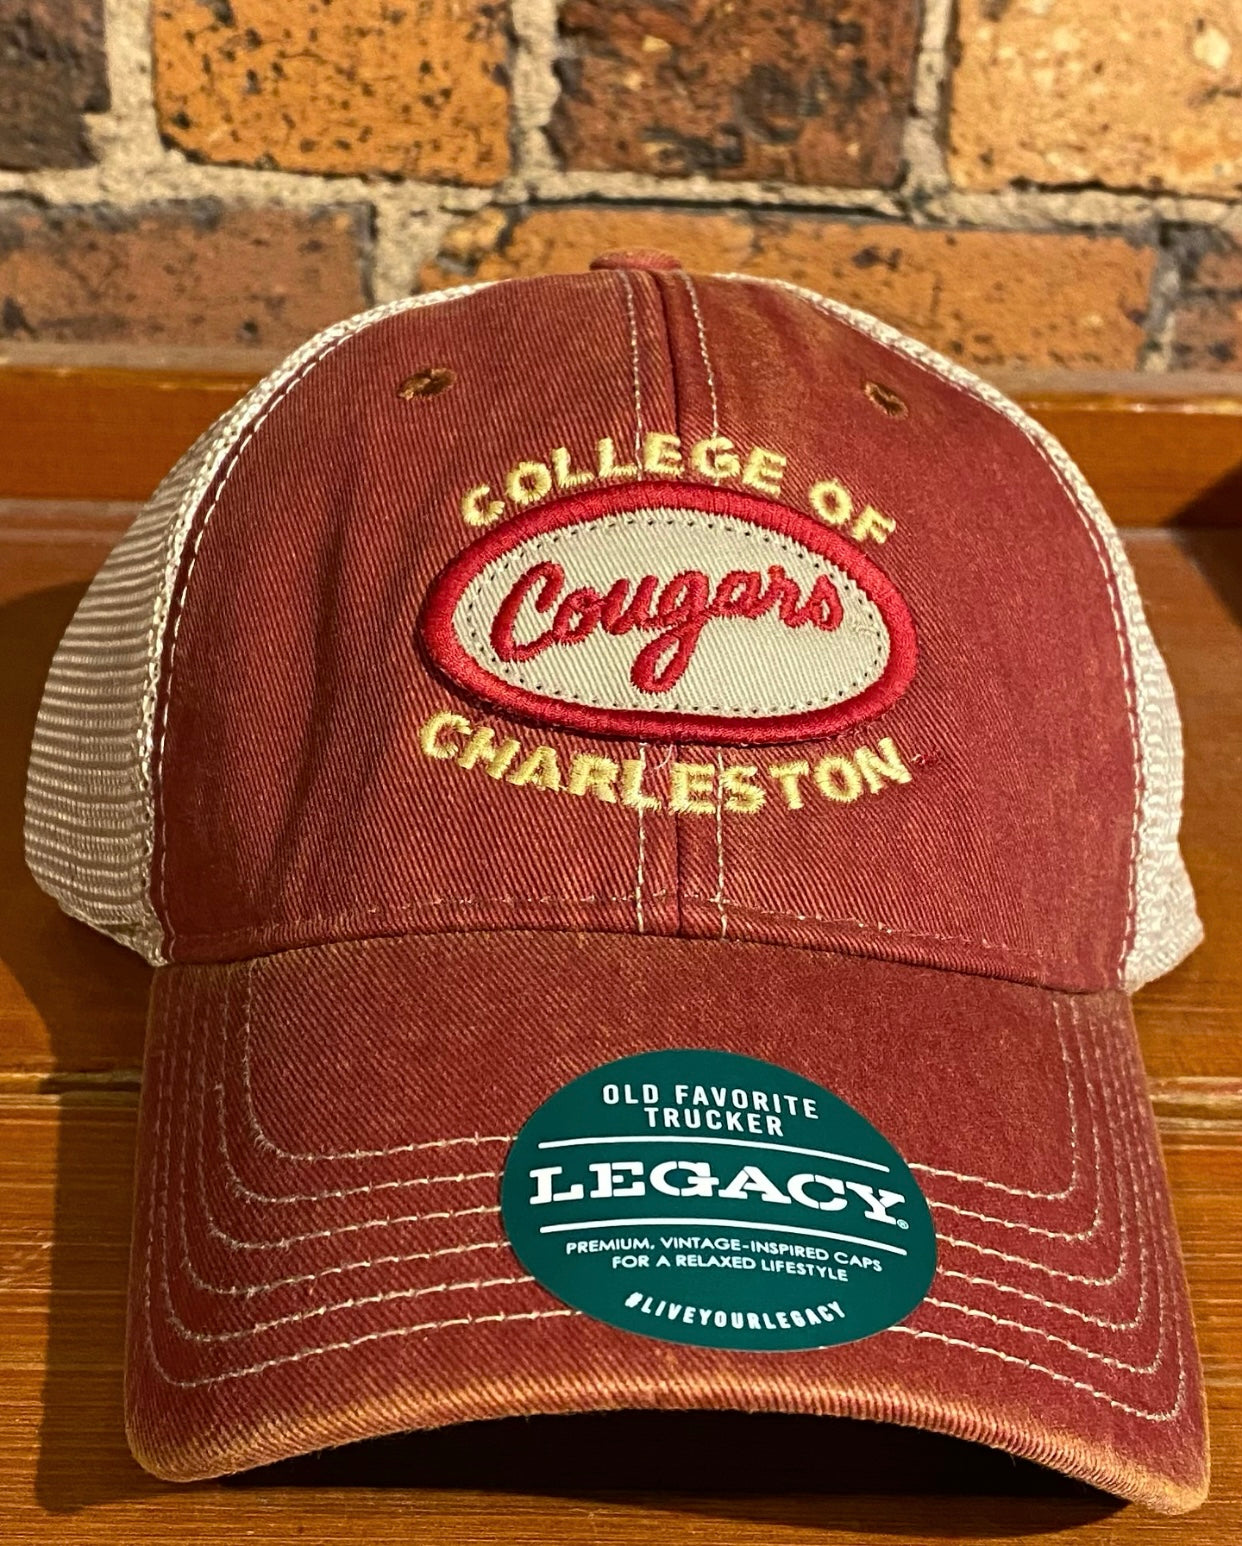 College of Charleston Legacy Old Favorite Trucker Hat